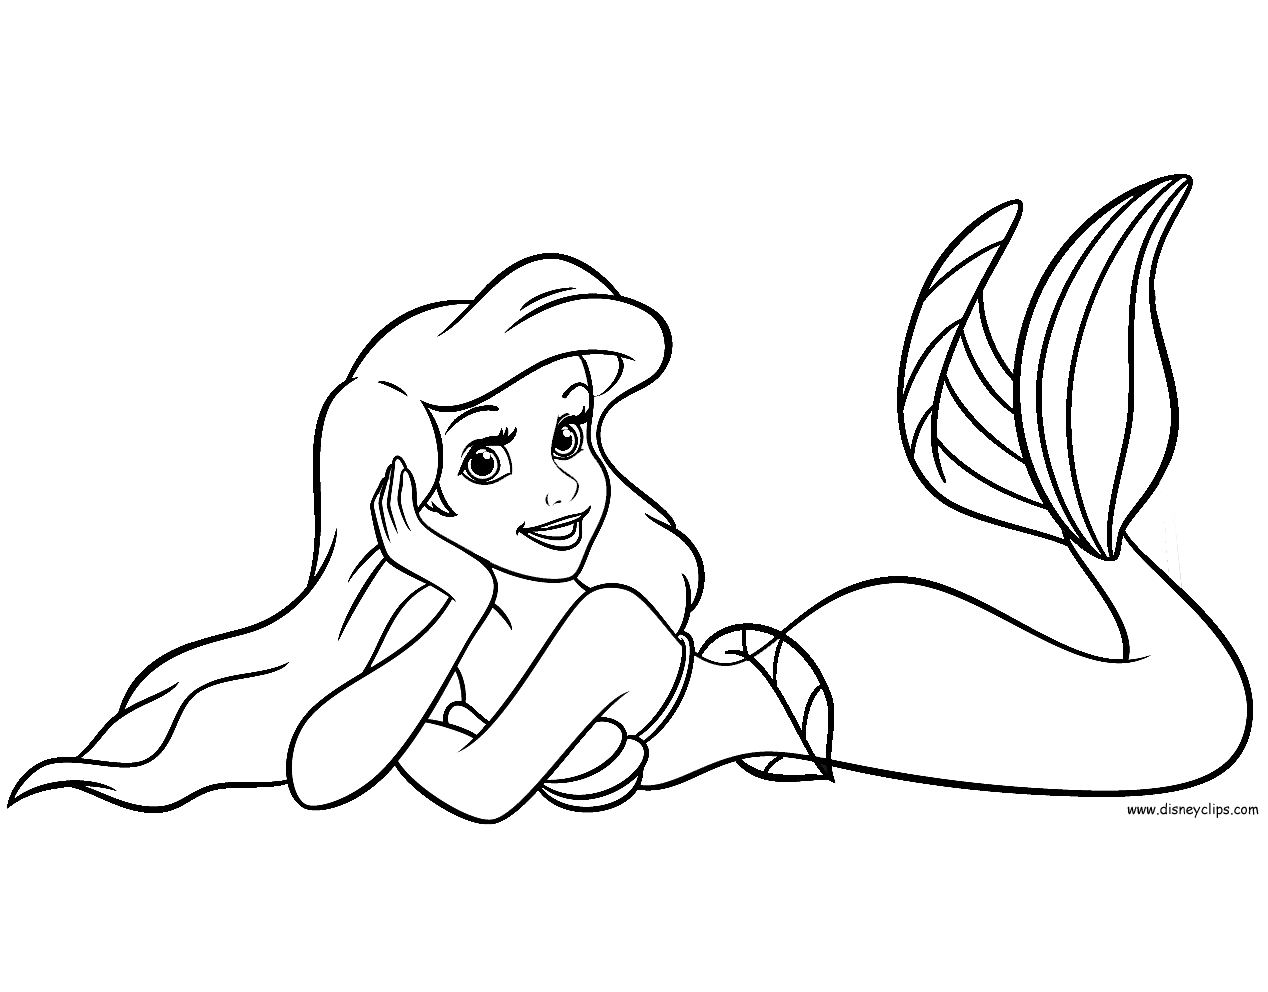 arielcoloringgif 9921268  Mermaid coloring pages Disney princess 